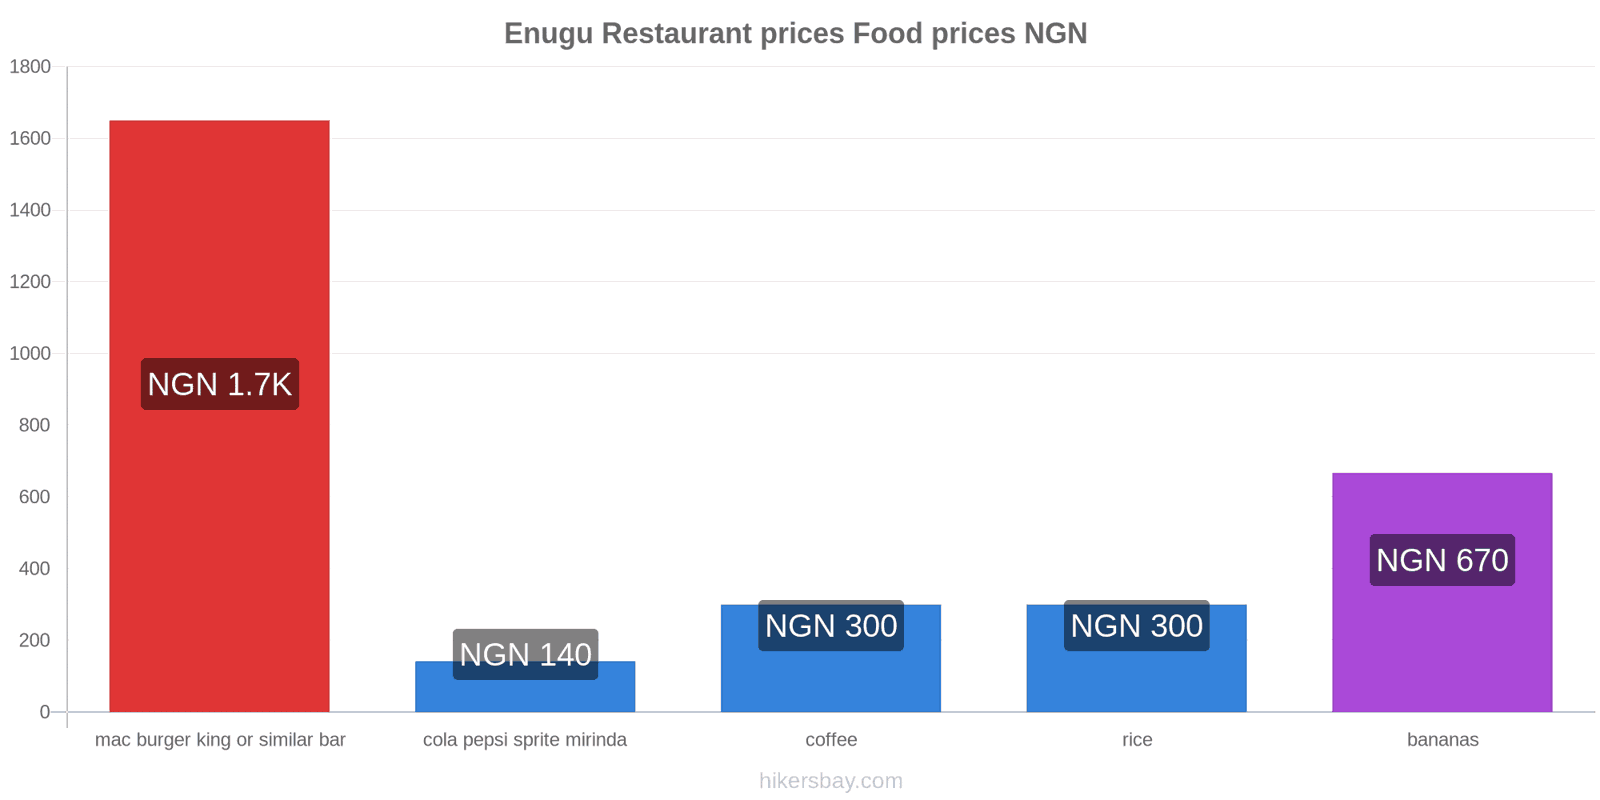 Enugu price changes hikersbay.com